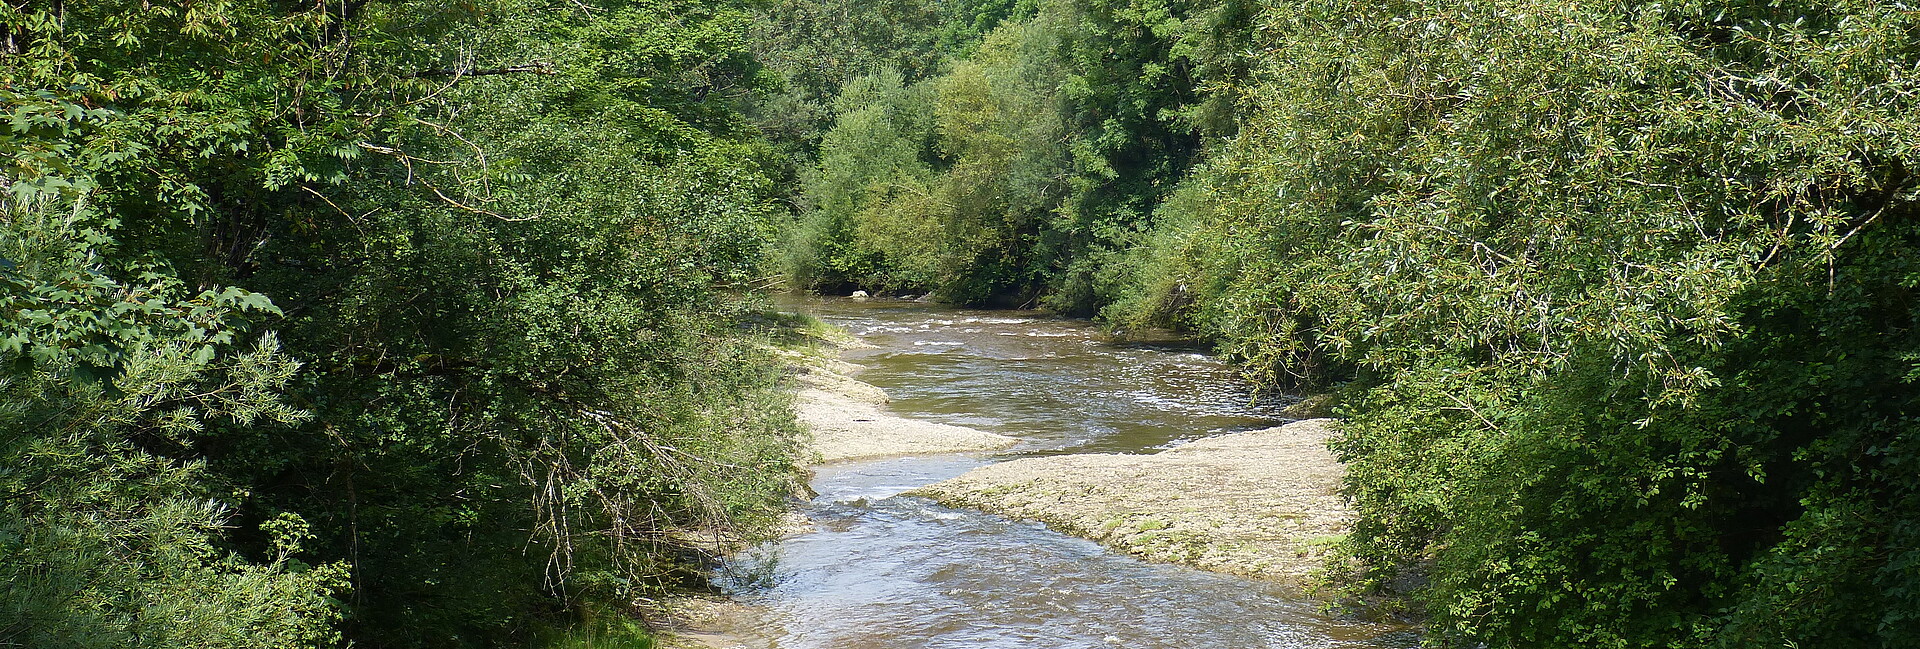 Blick auf den Fluss Untere Argen